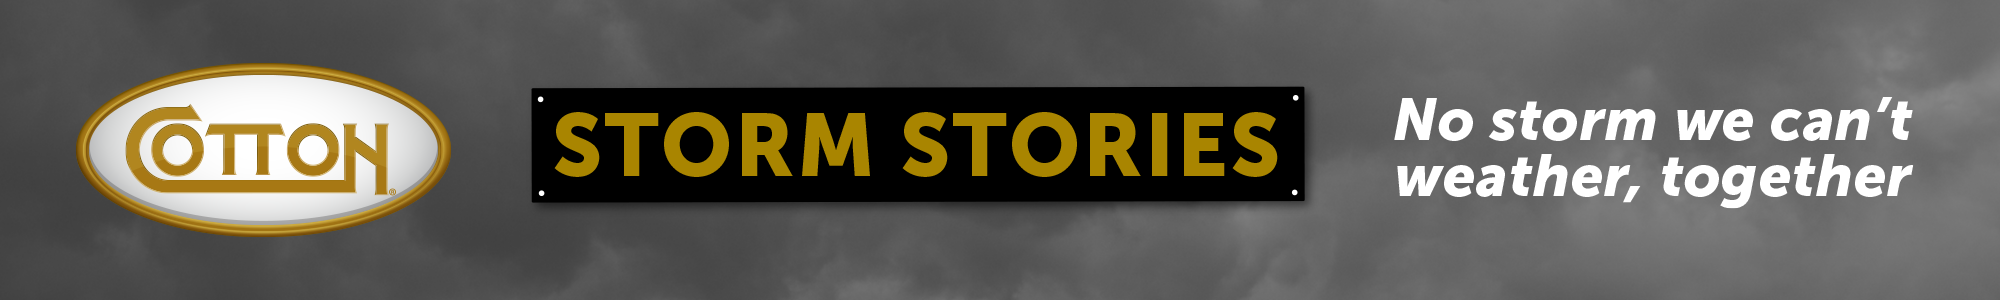 HLDS - Storm Stories - HEADER.png